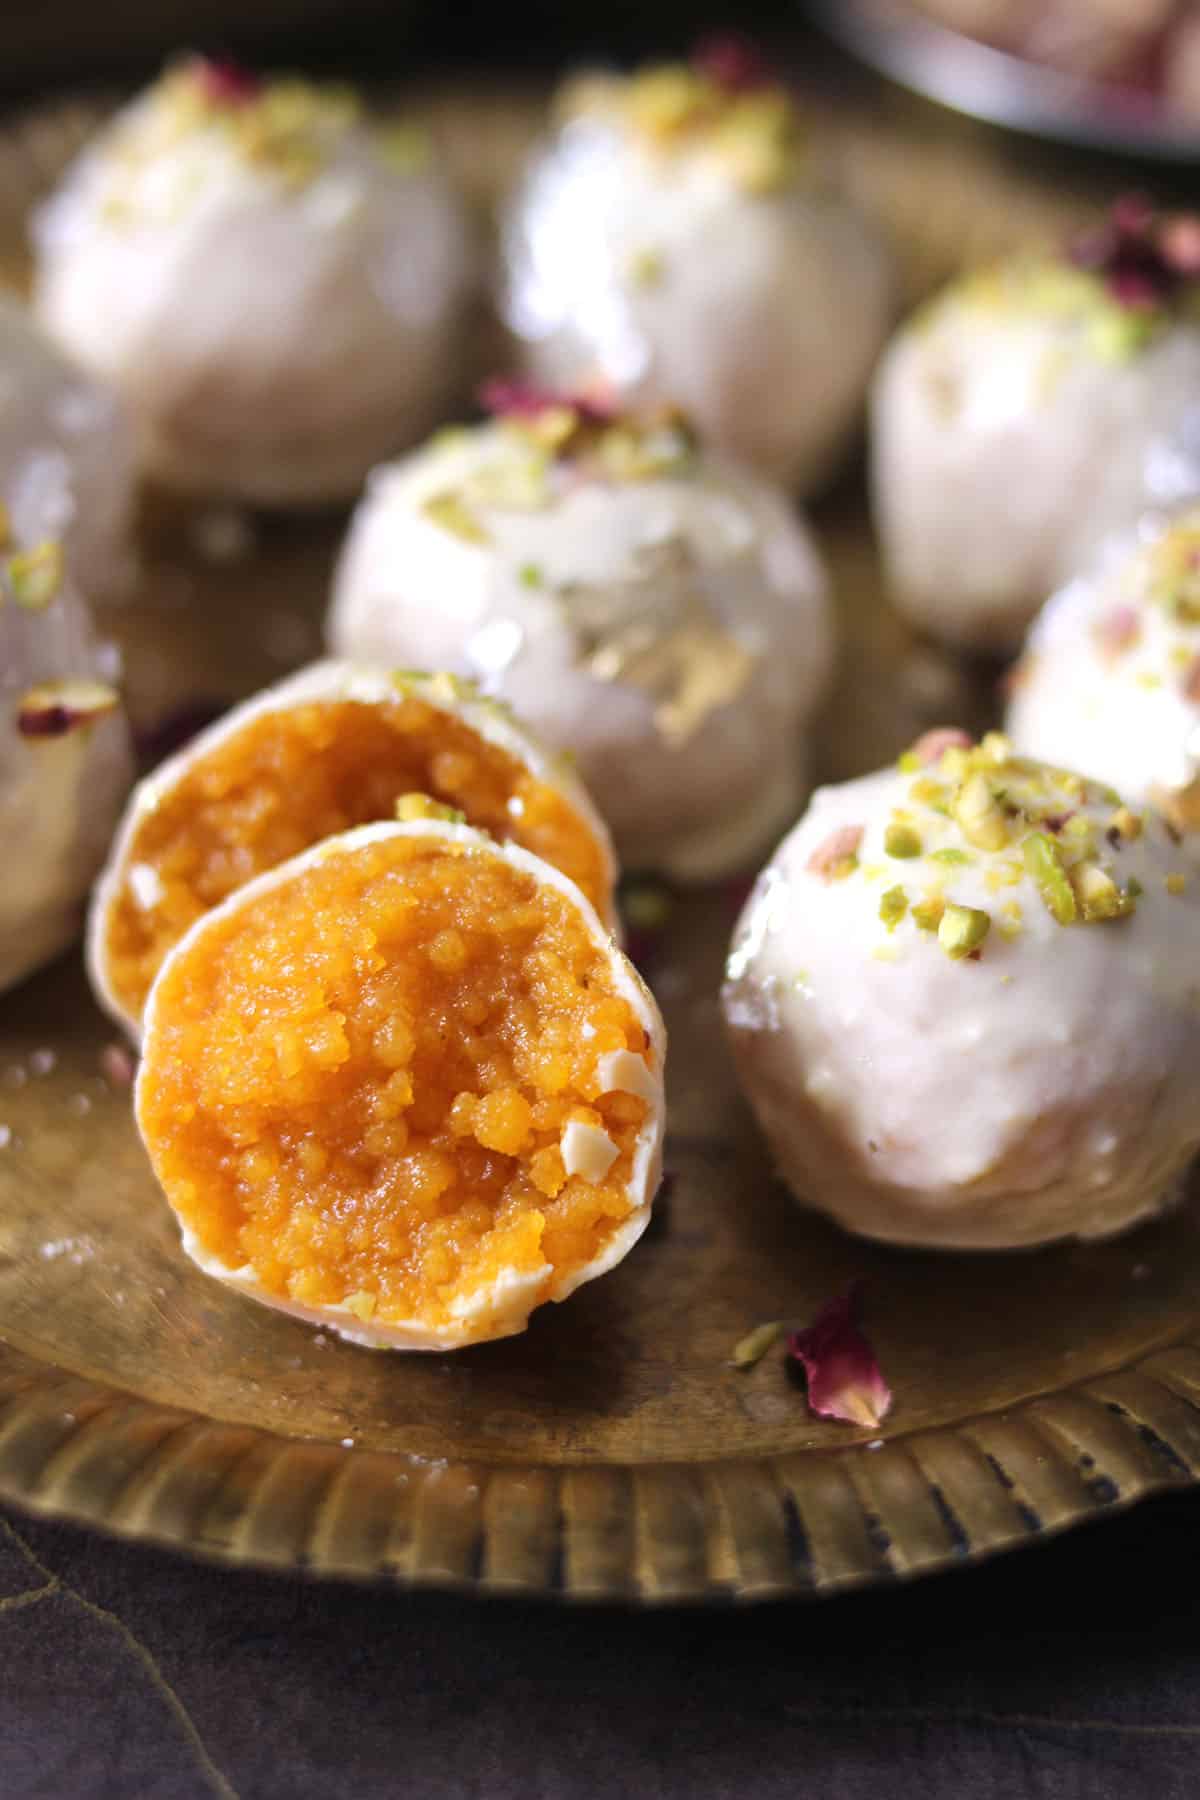 Motichoor Ladoo truffles, Motichur laddu truffles cut into halves - speical fusion Indian dessert for Diwali and occasions 